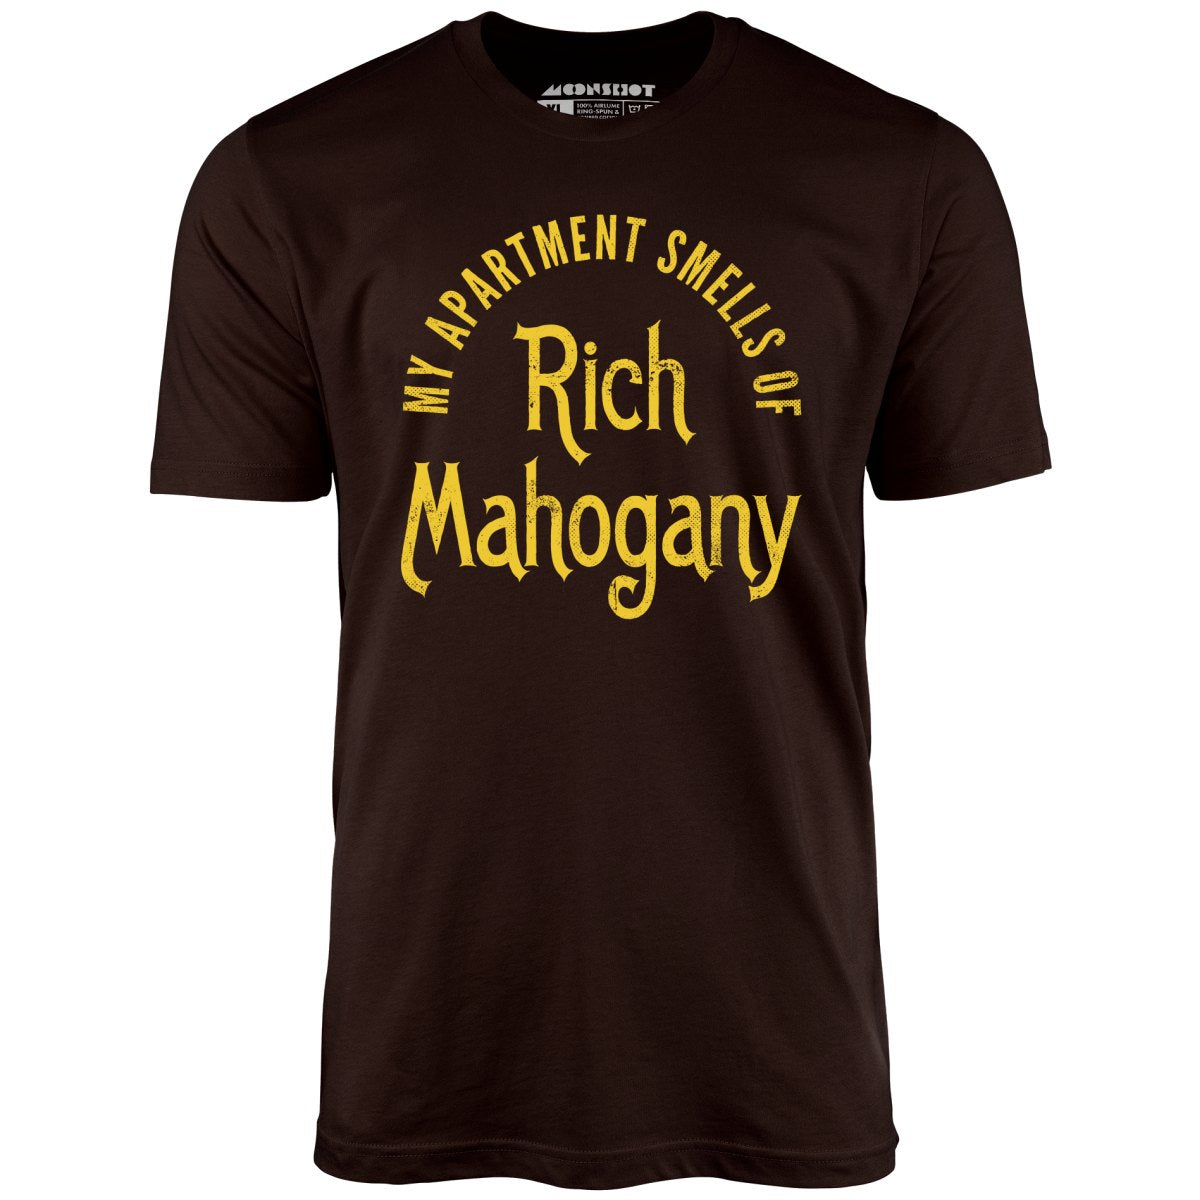 My Apartment Smells of Rich Mahogany - Unisex T-Shirt